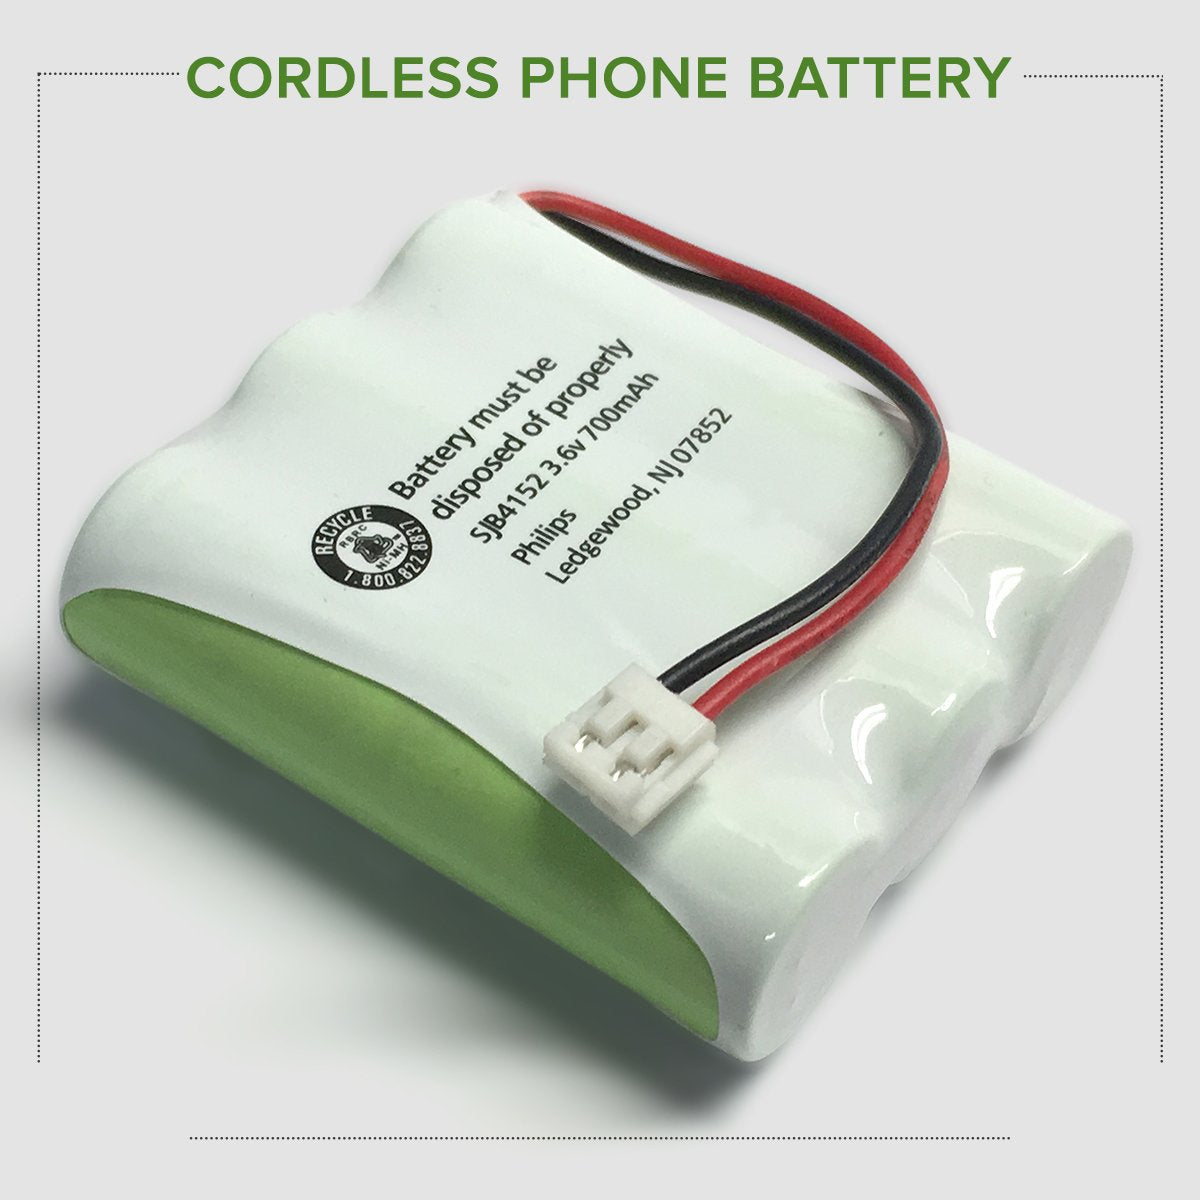 GE 2-7998 Cordless Phone Battery